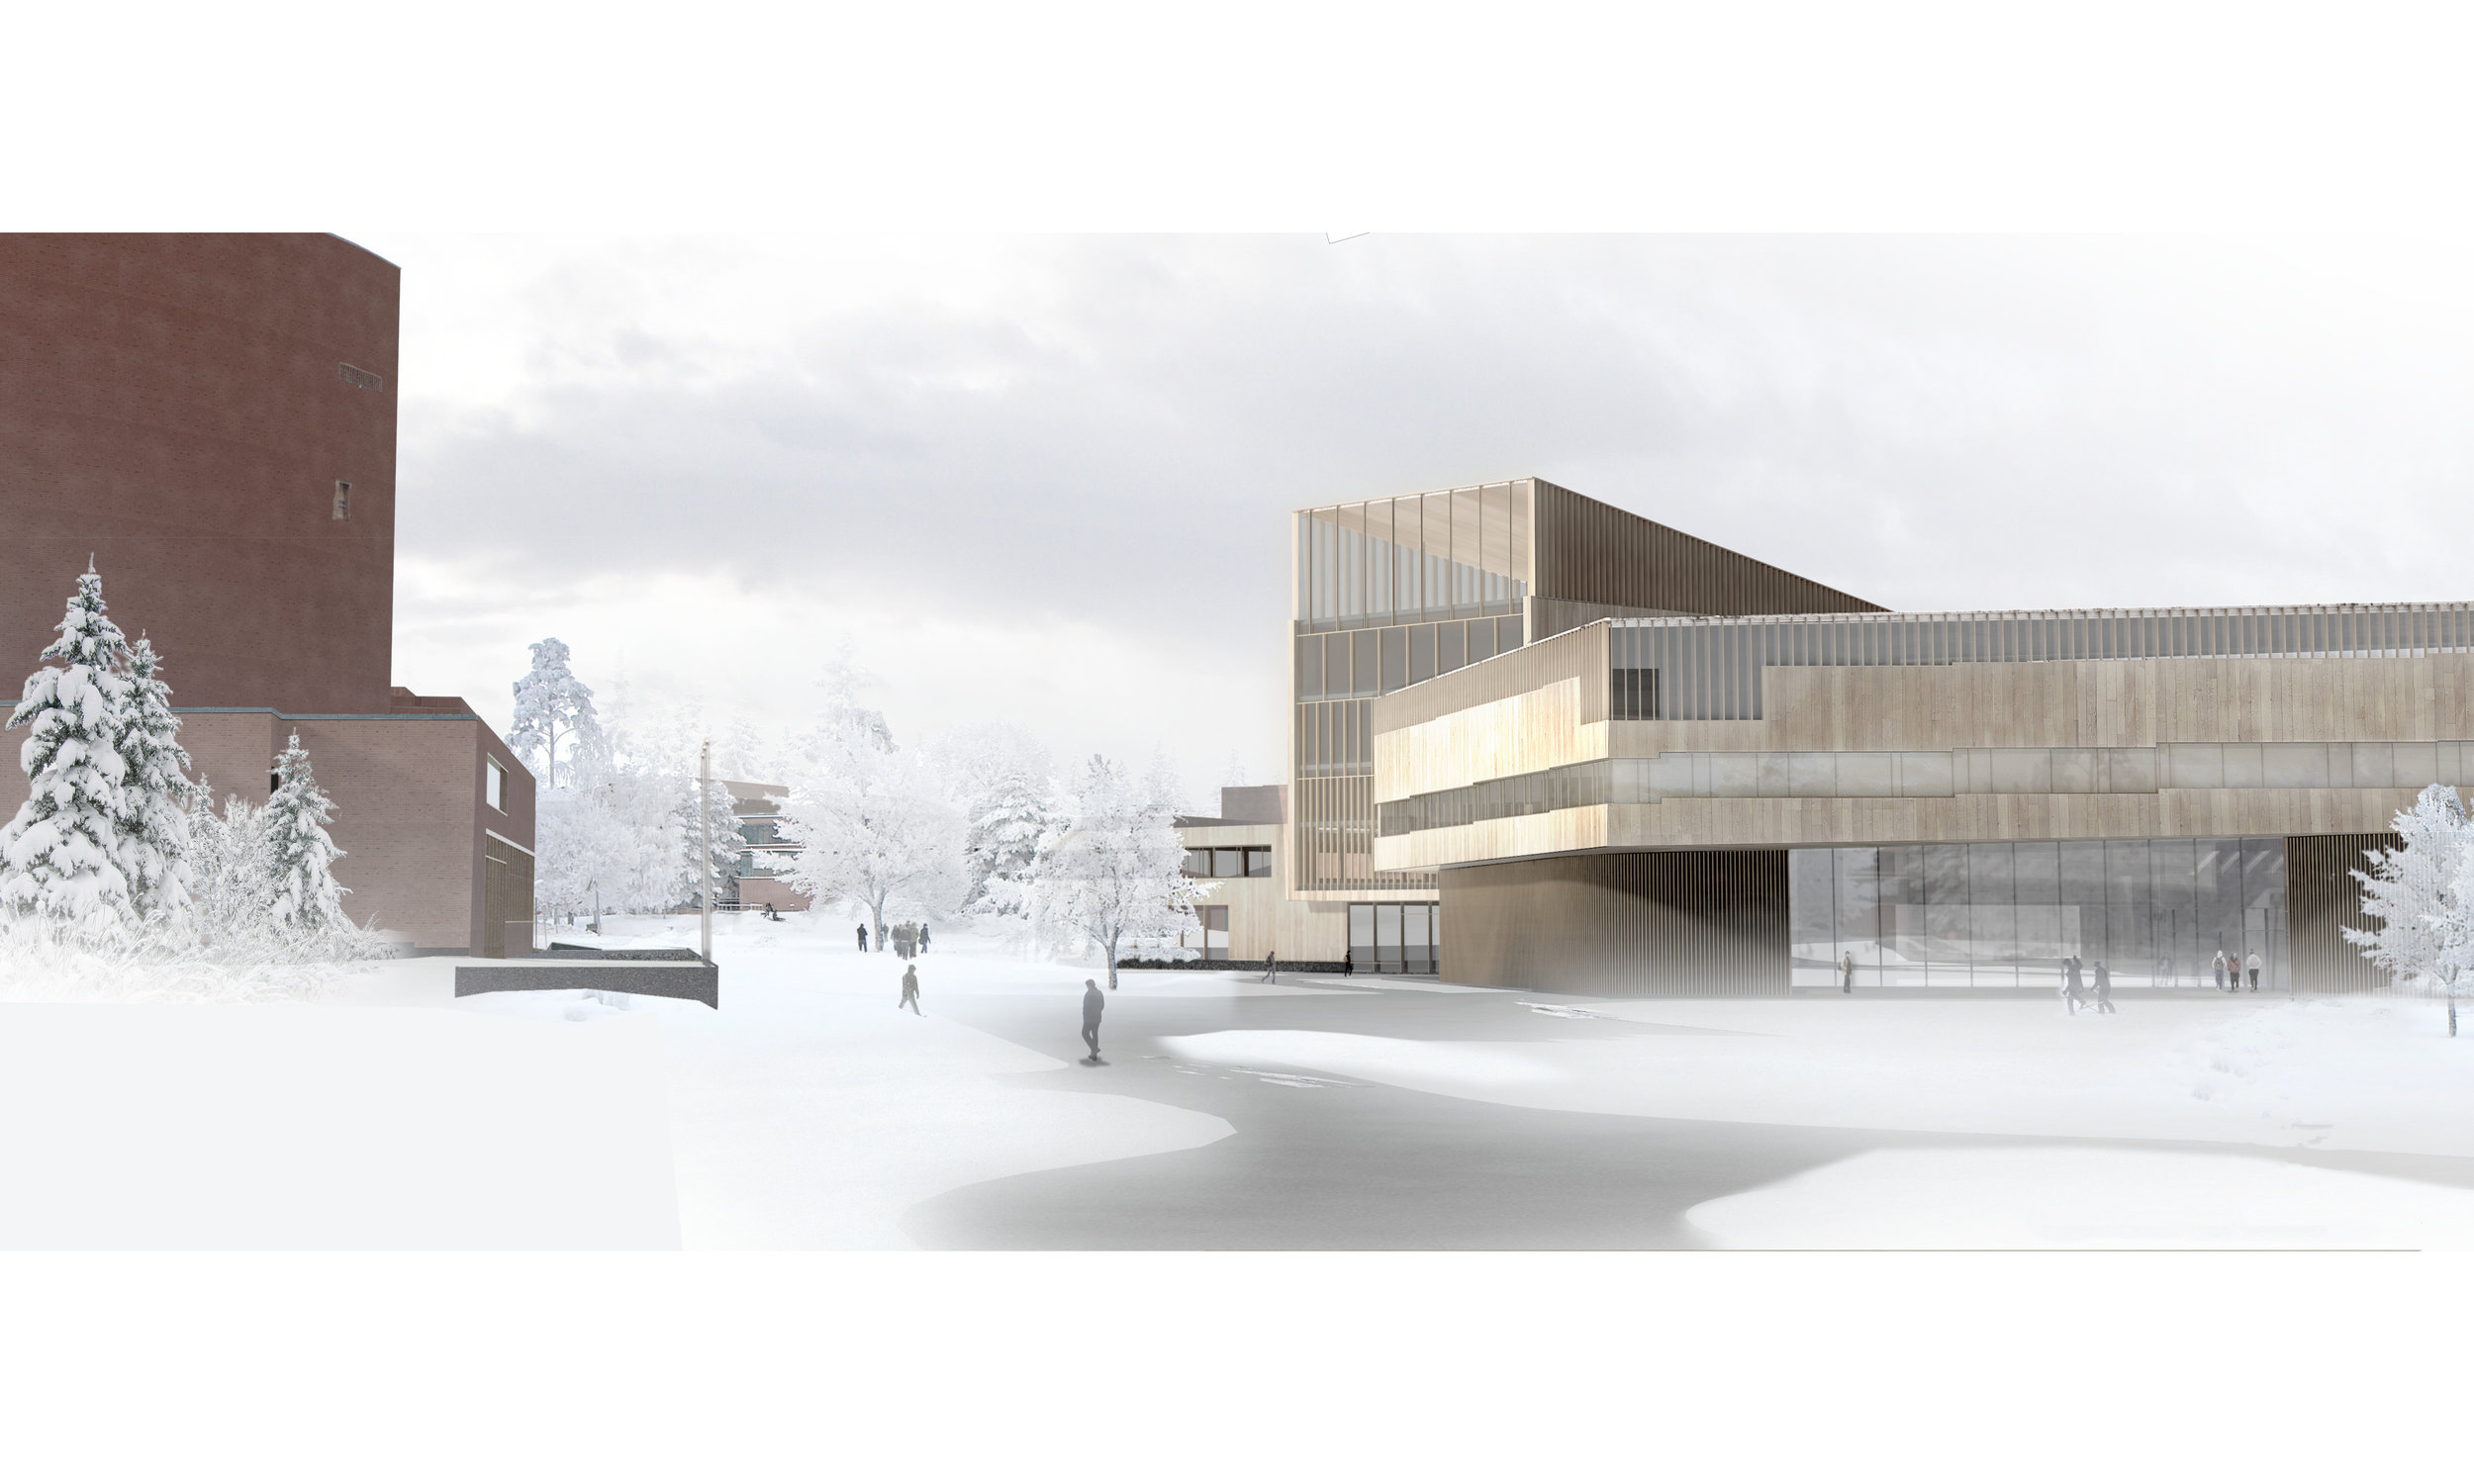 AALTO UNIVERSITY SCHOOL OF ART AND DESIGN, Helsinki, Finland